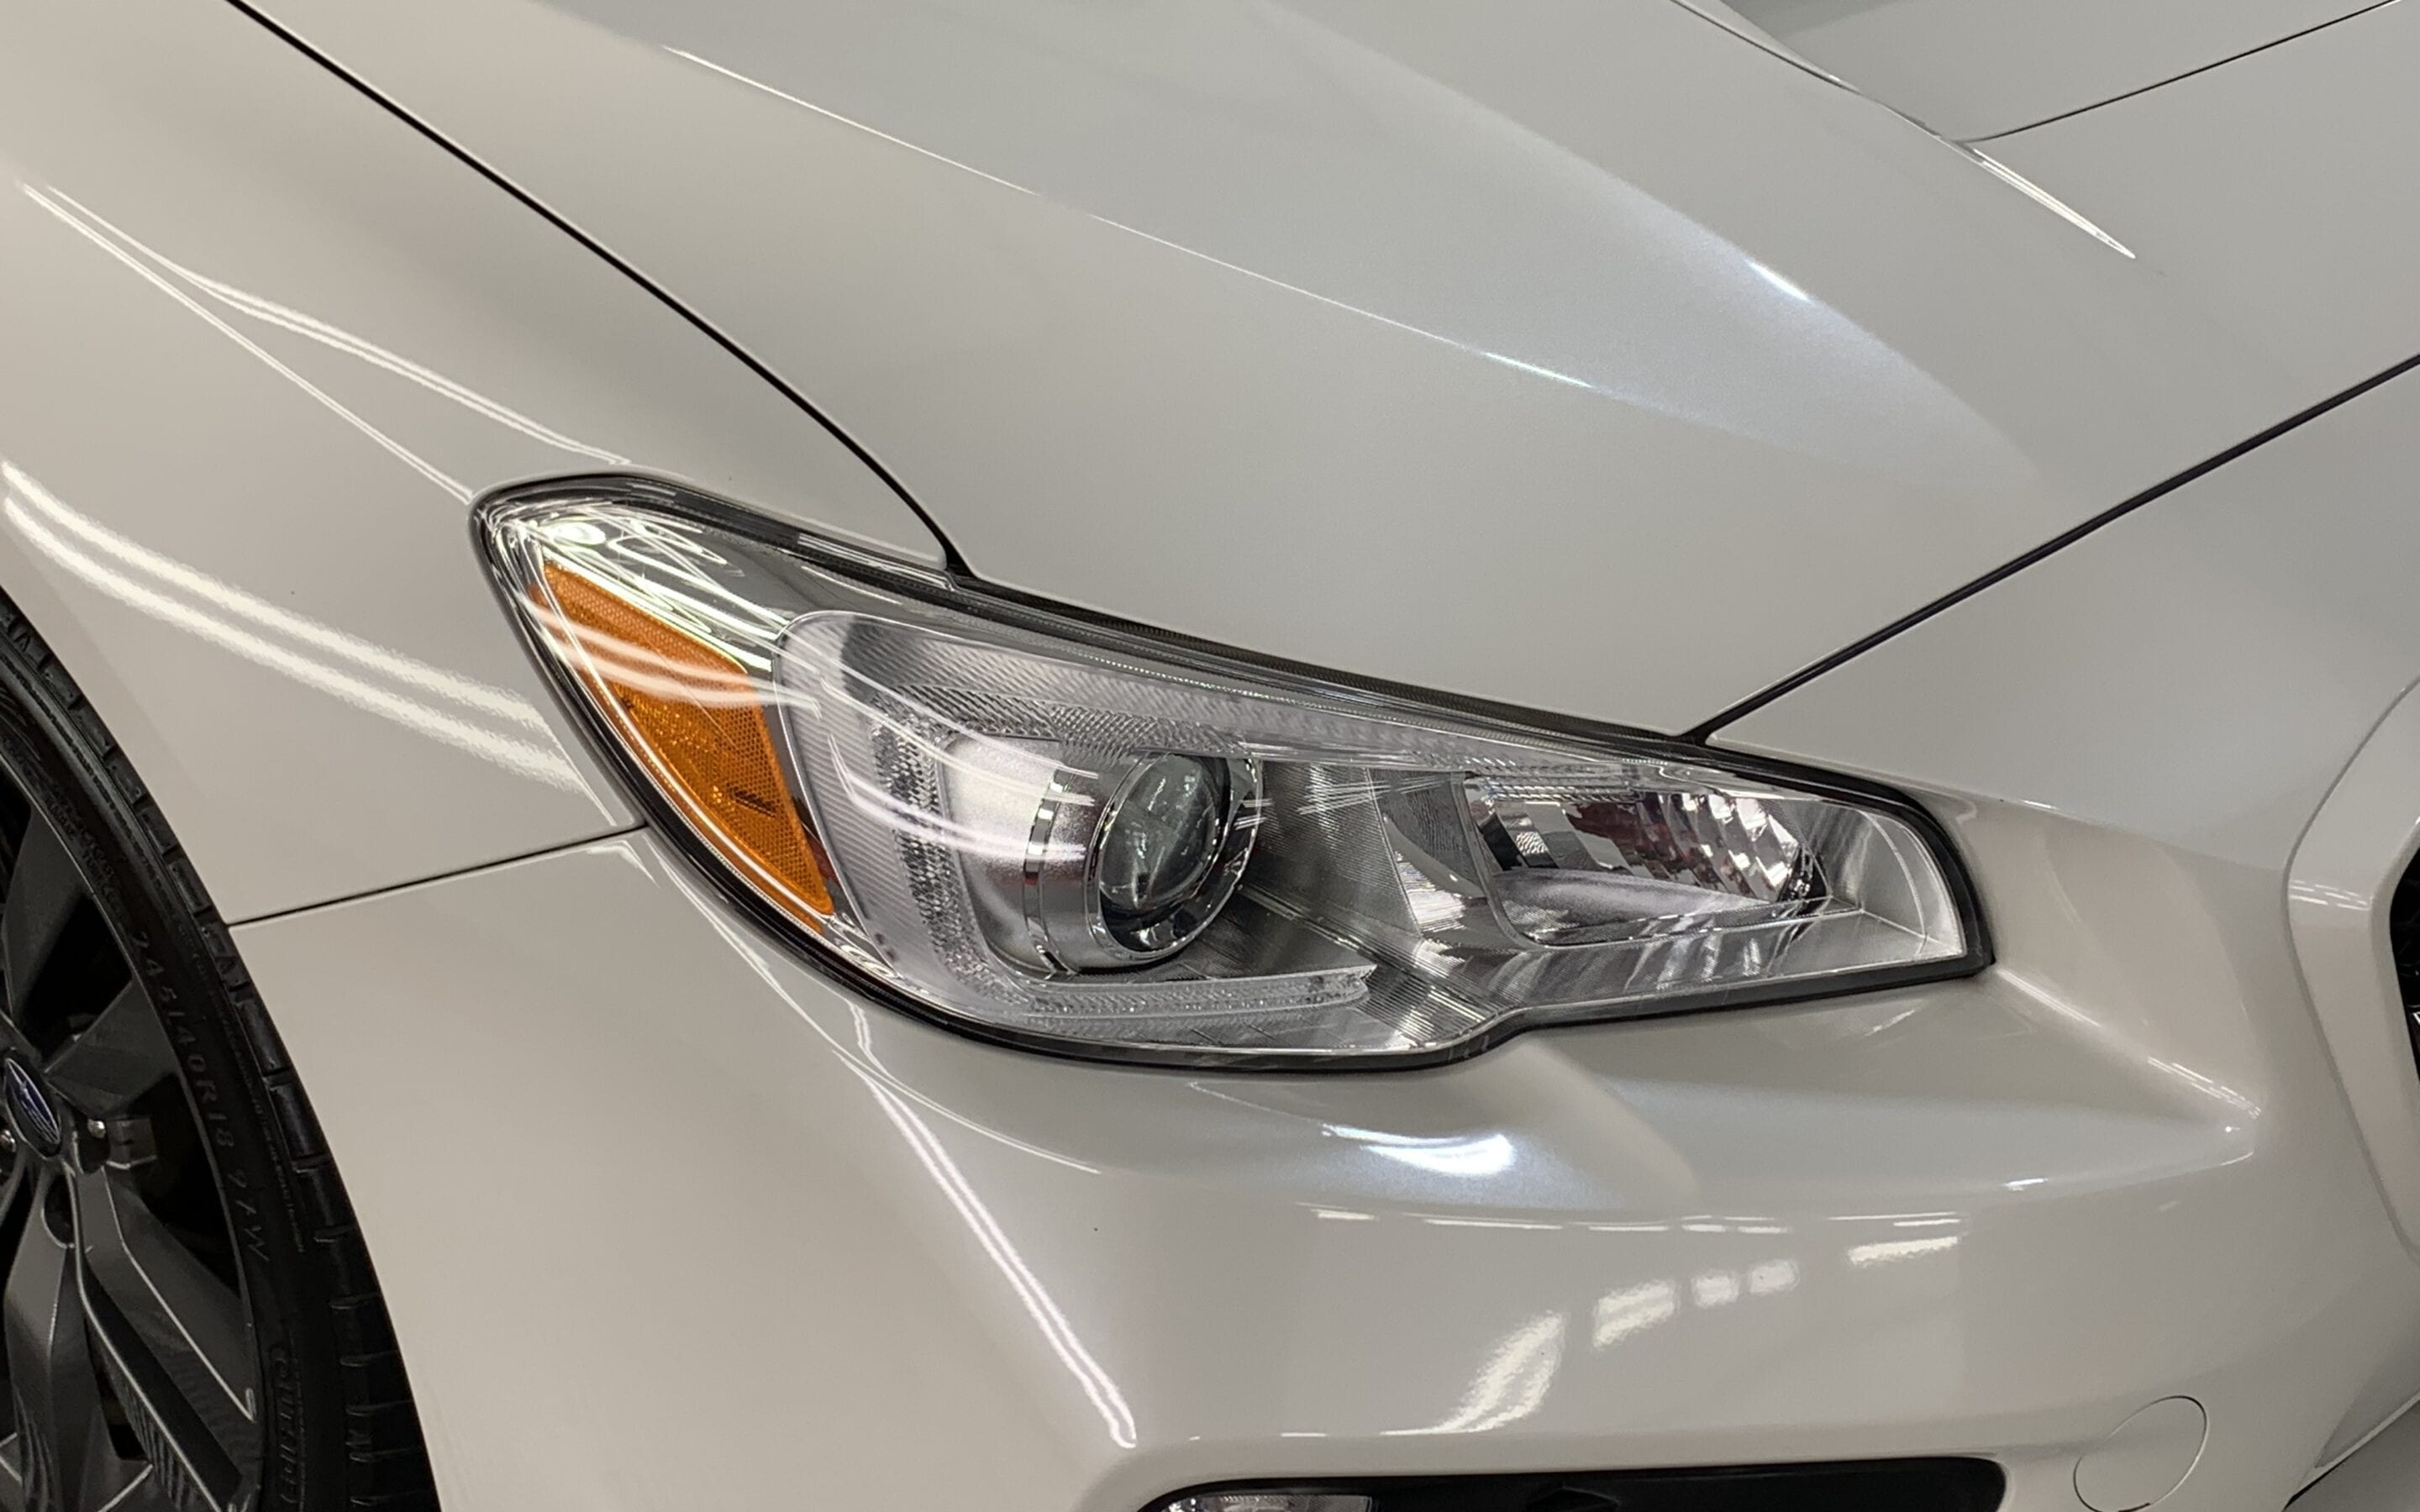 Full Detail of a 2016 Subaru BRZ